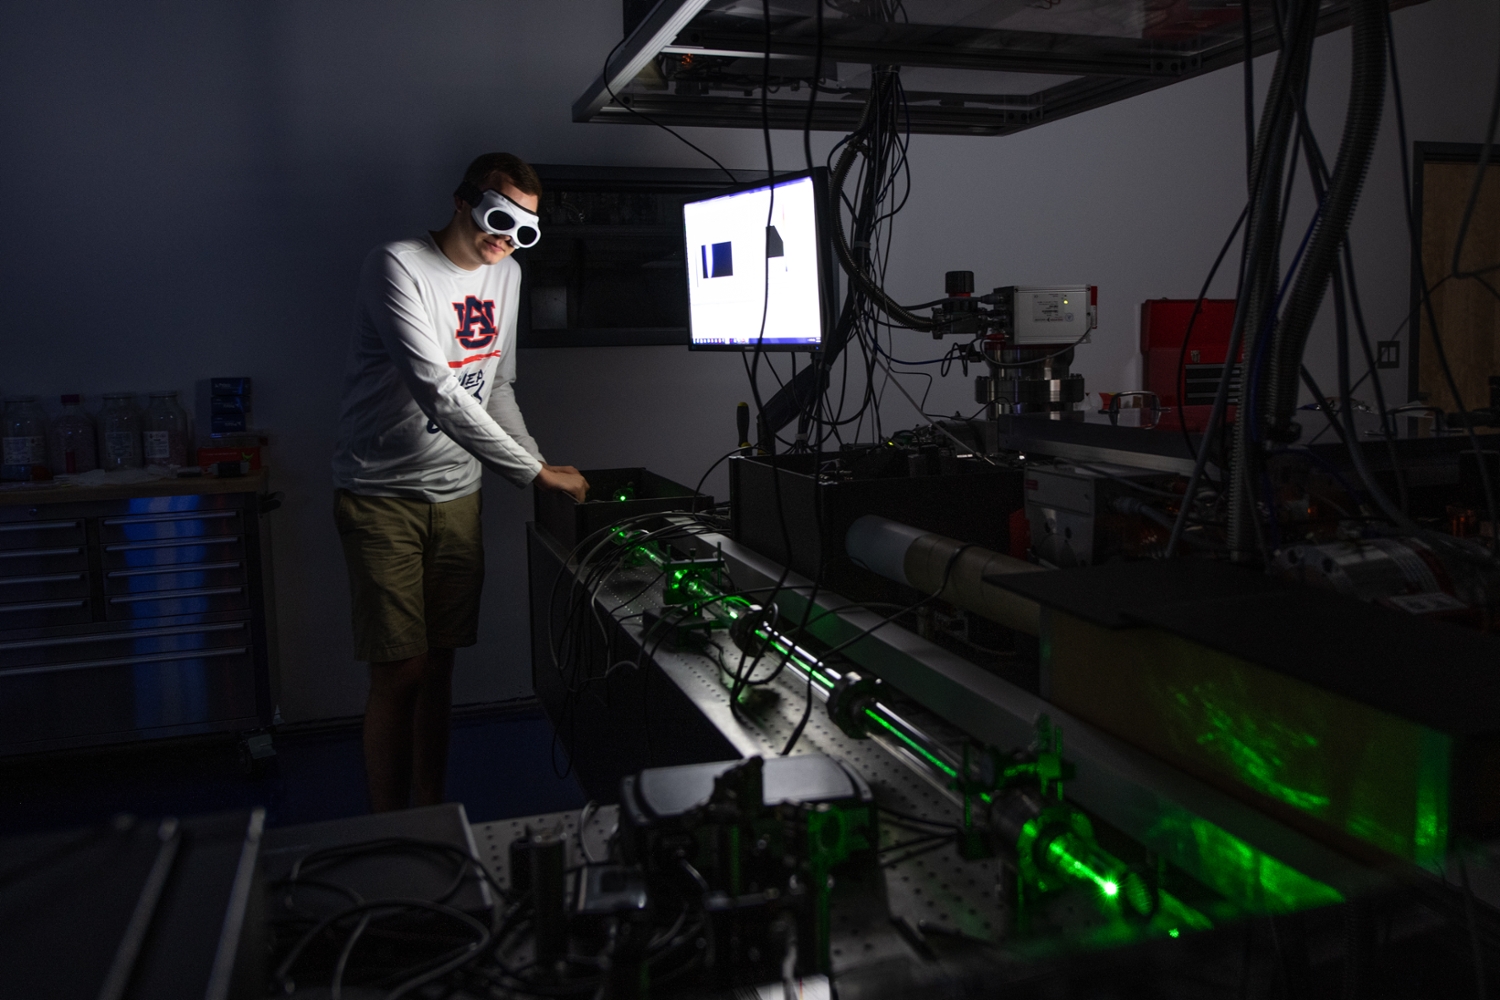 Brady Unzicker is seen conducting hands-on research in a lab.